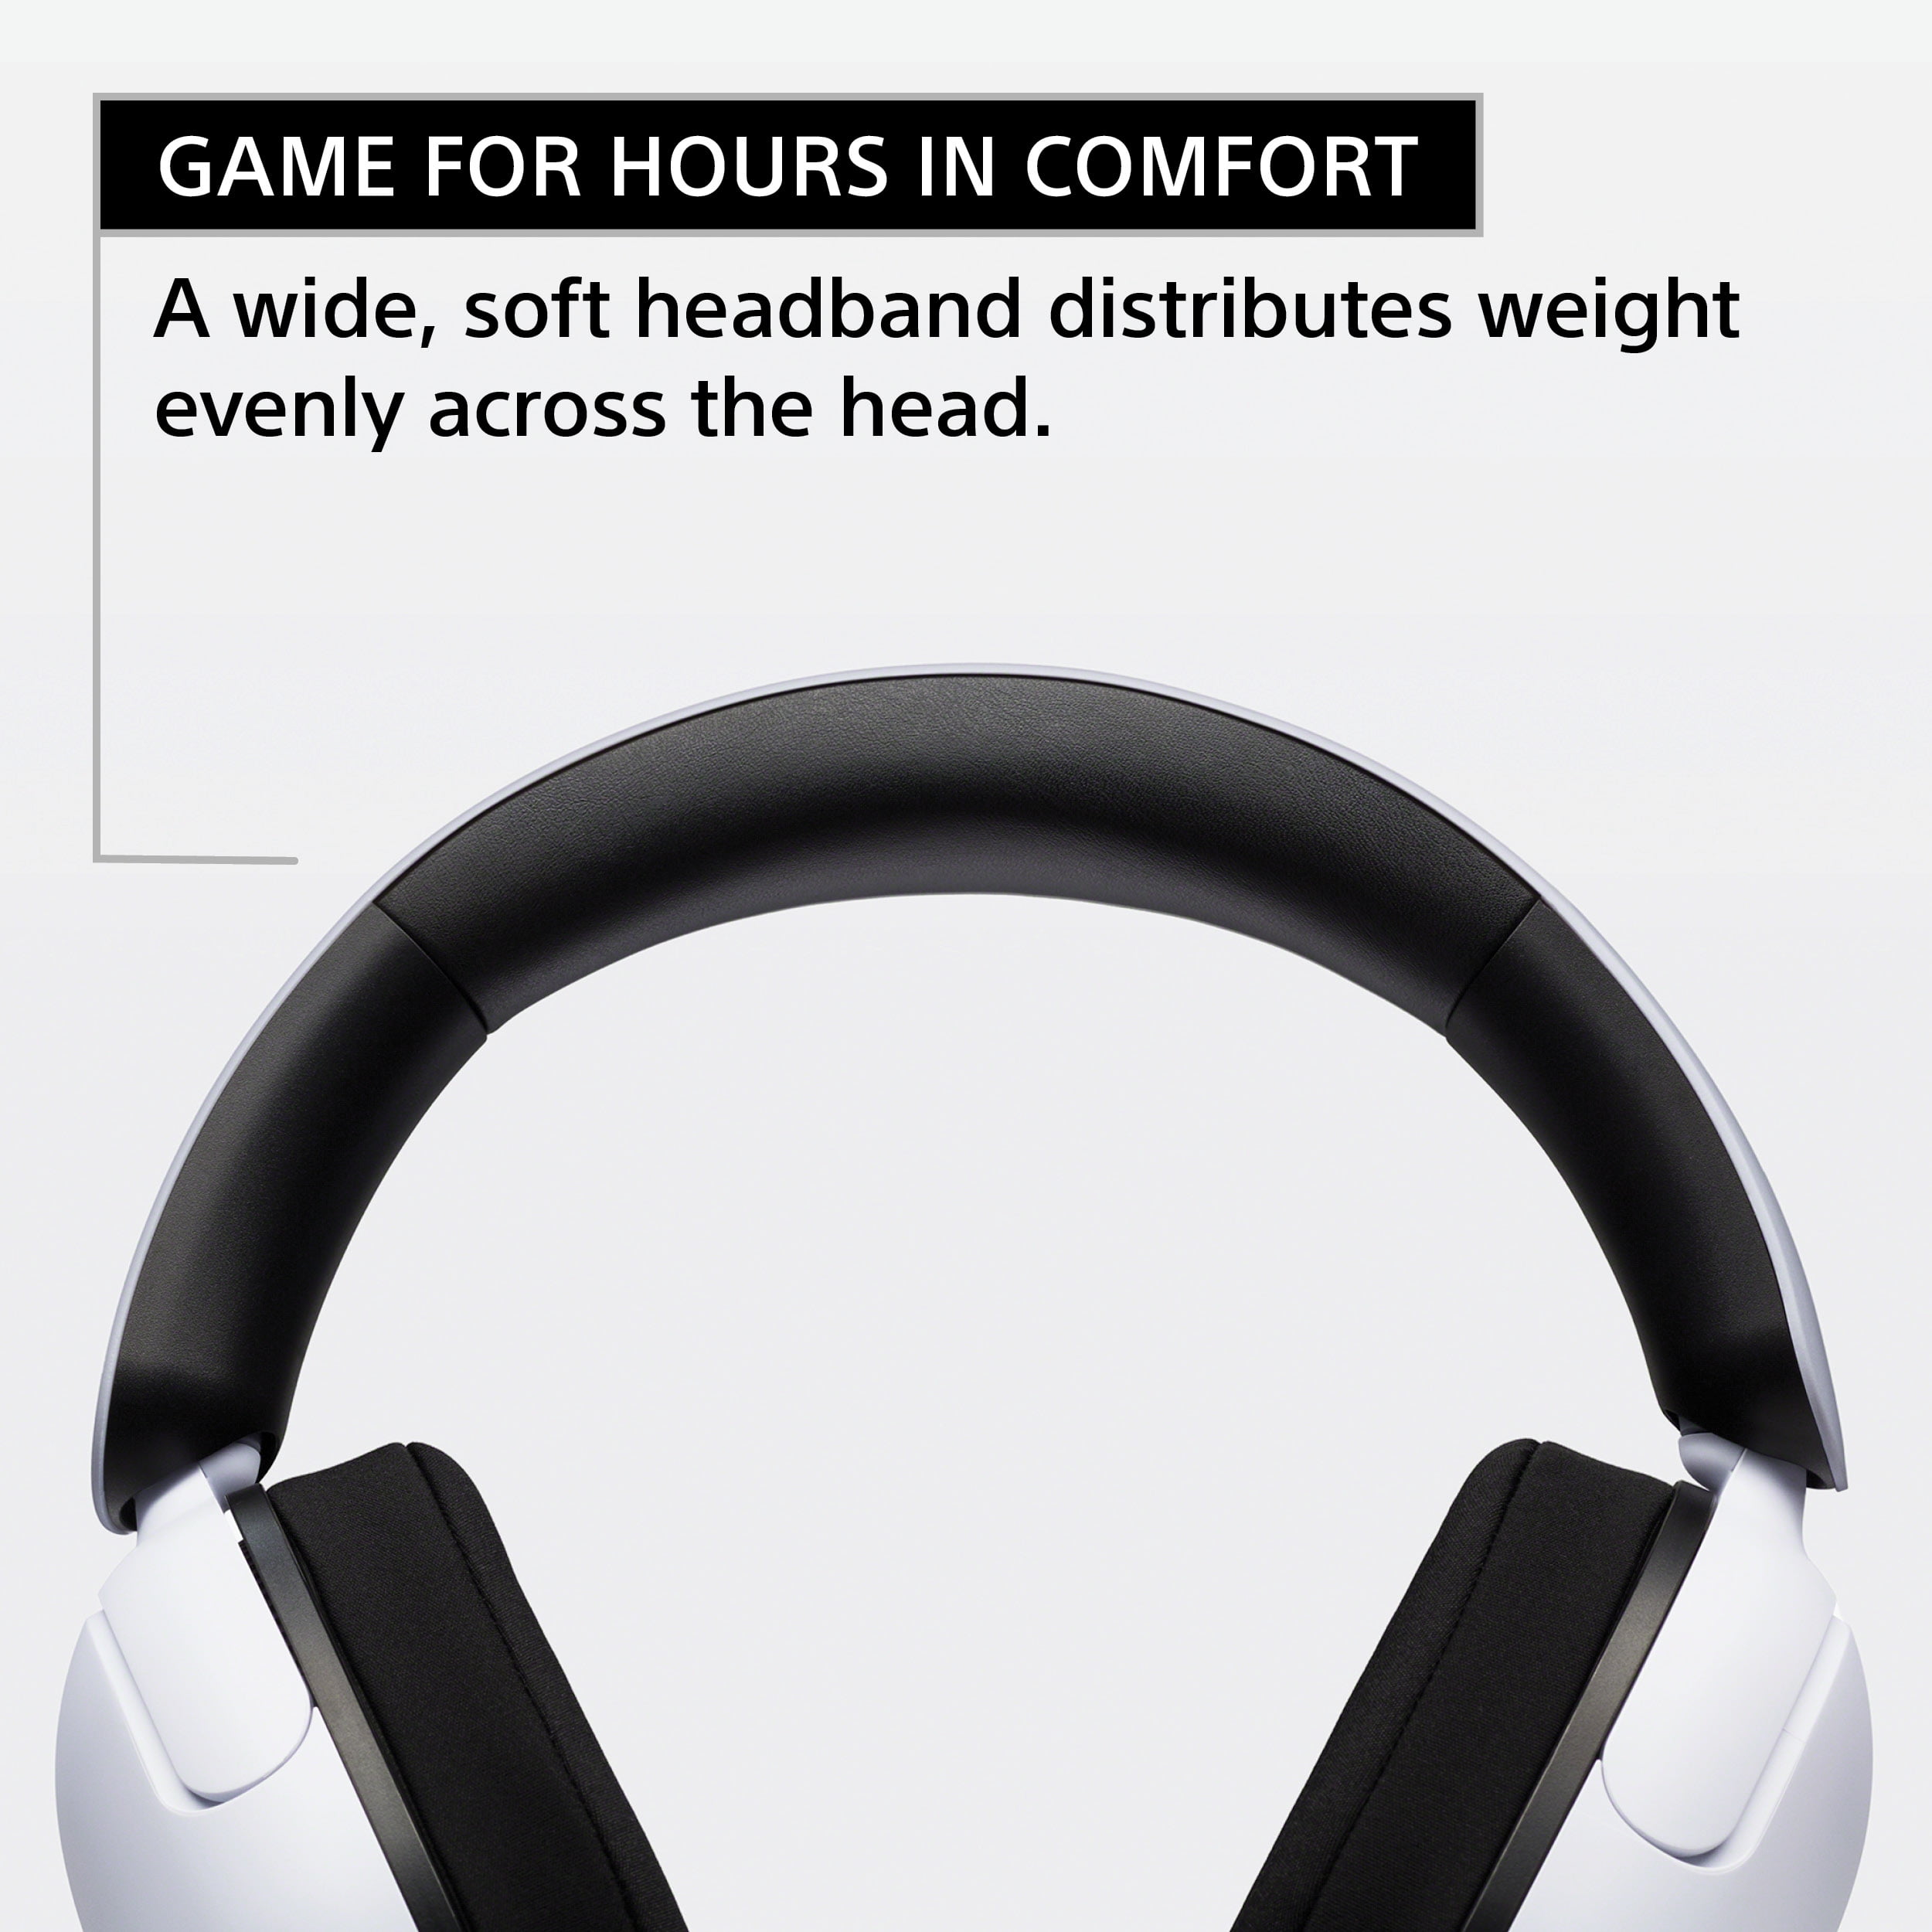 Sony INZONE H3 - Auriculares microfono - LDLC